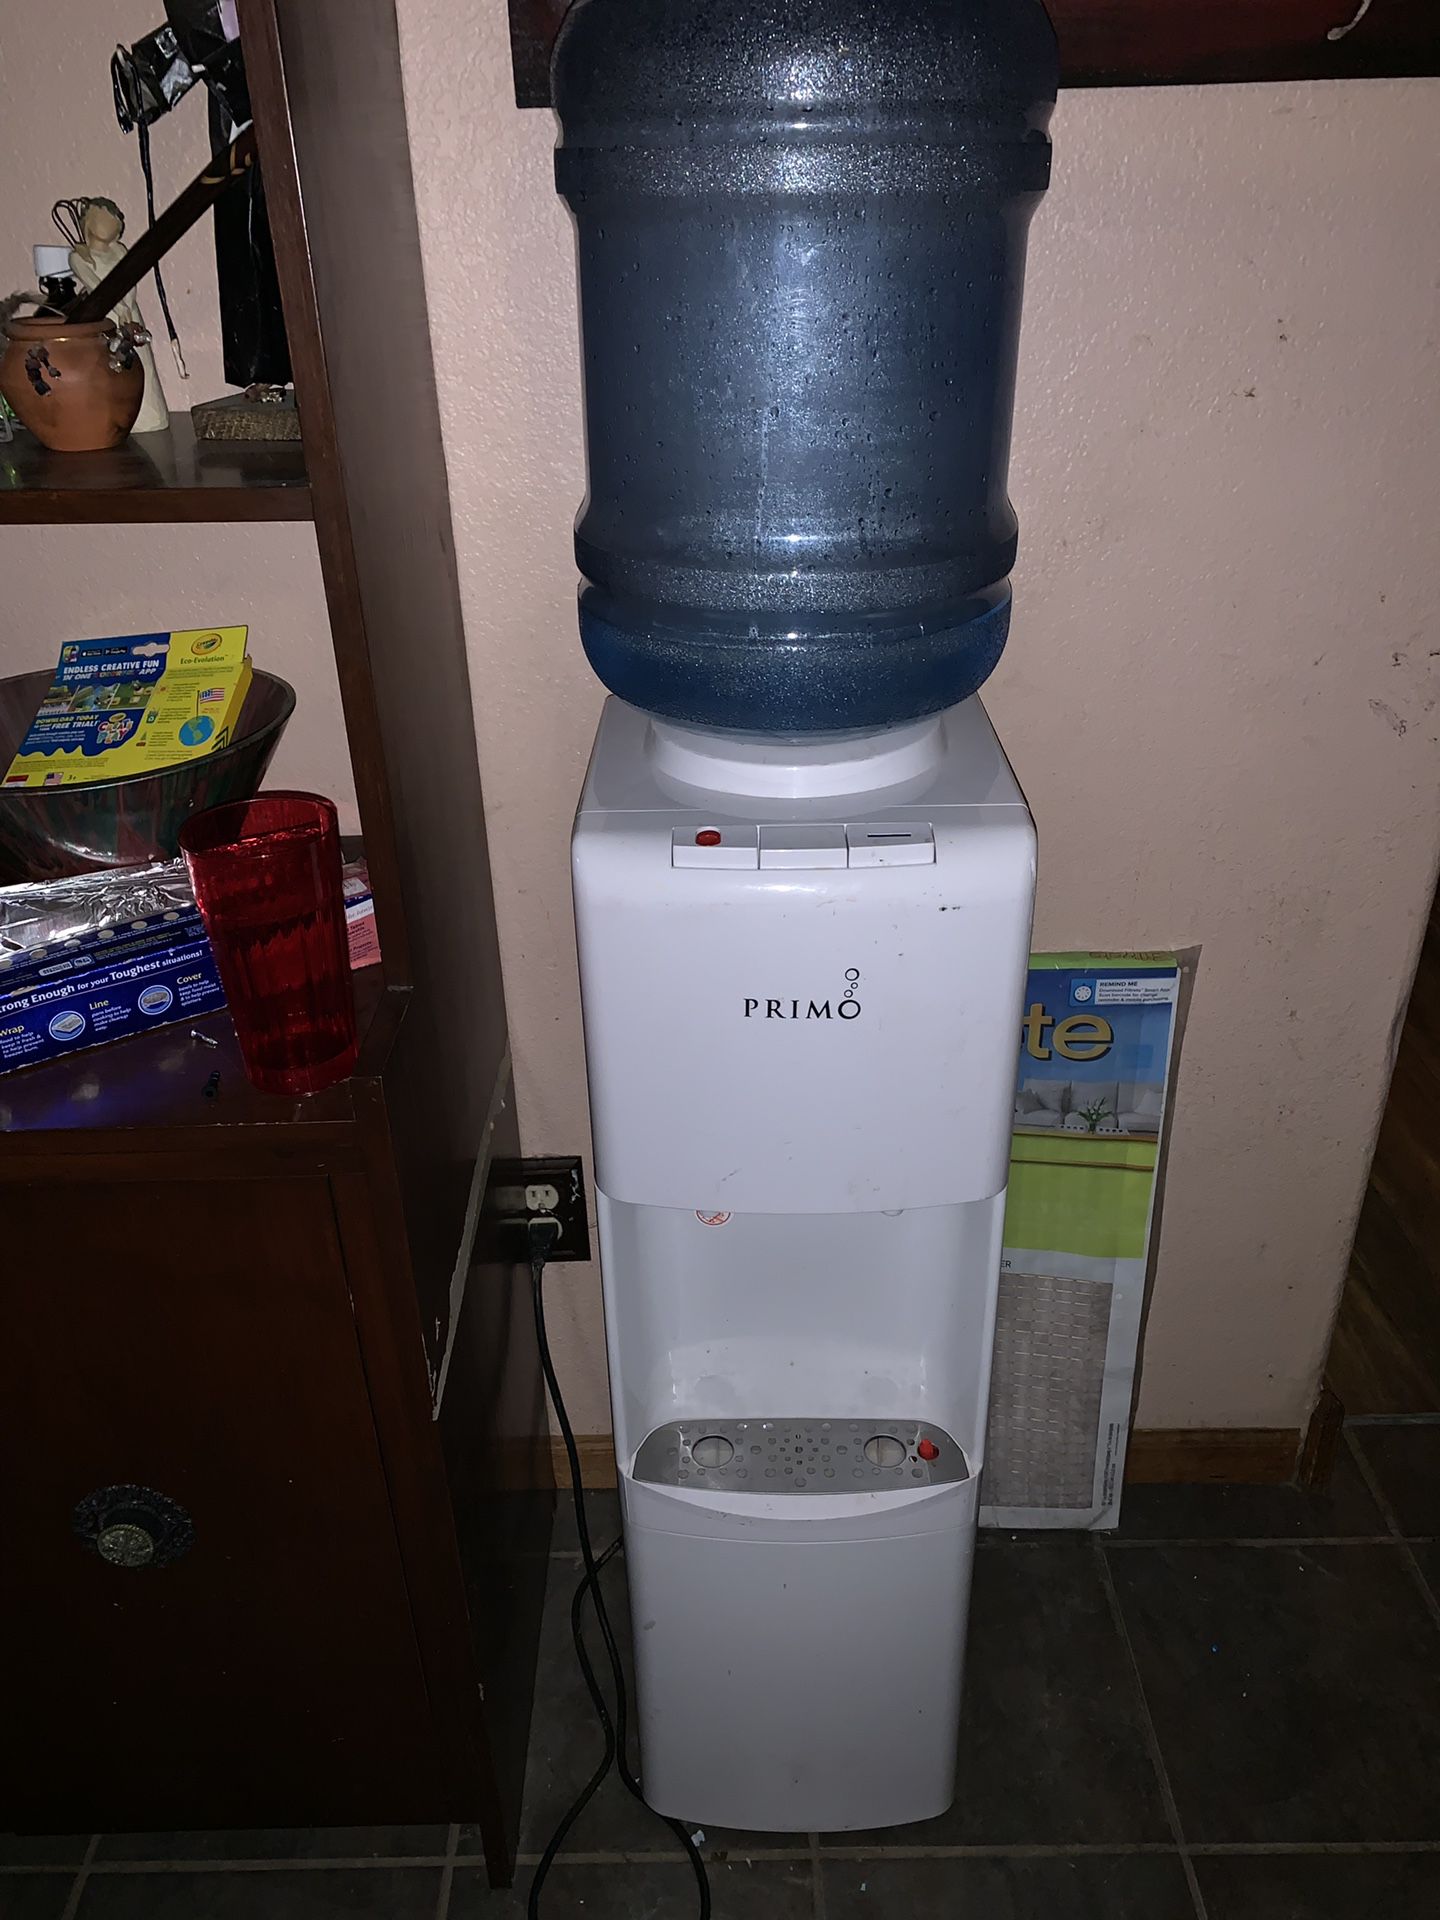 Primo top loading water dispenser